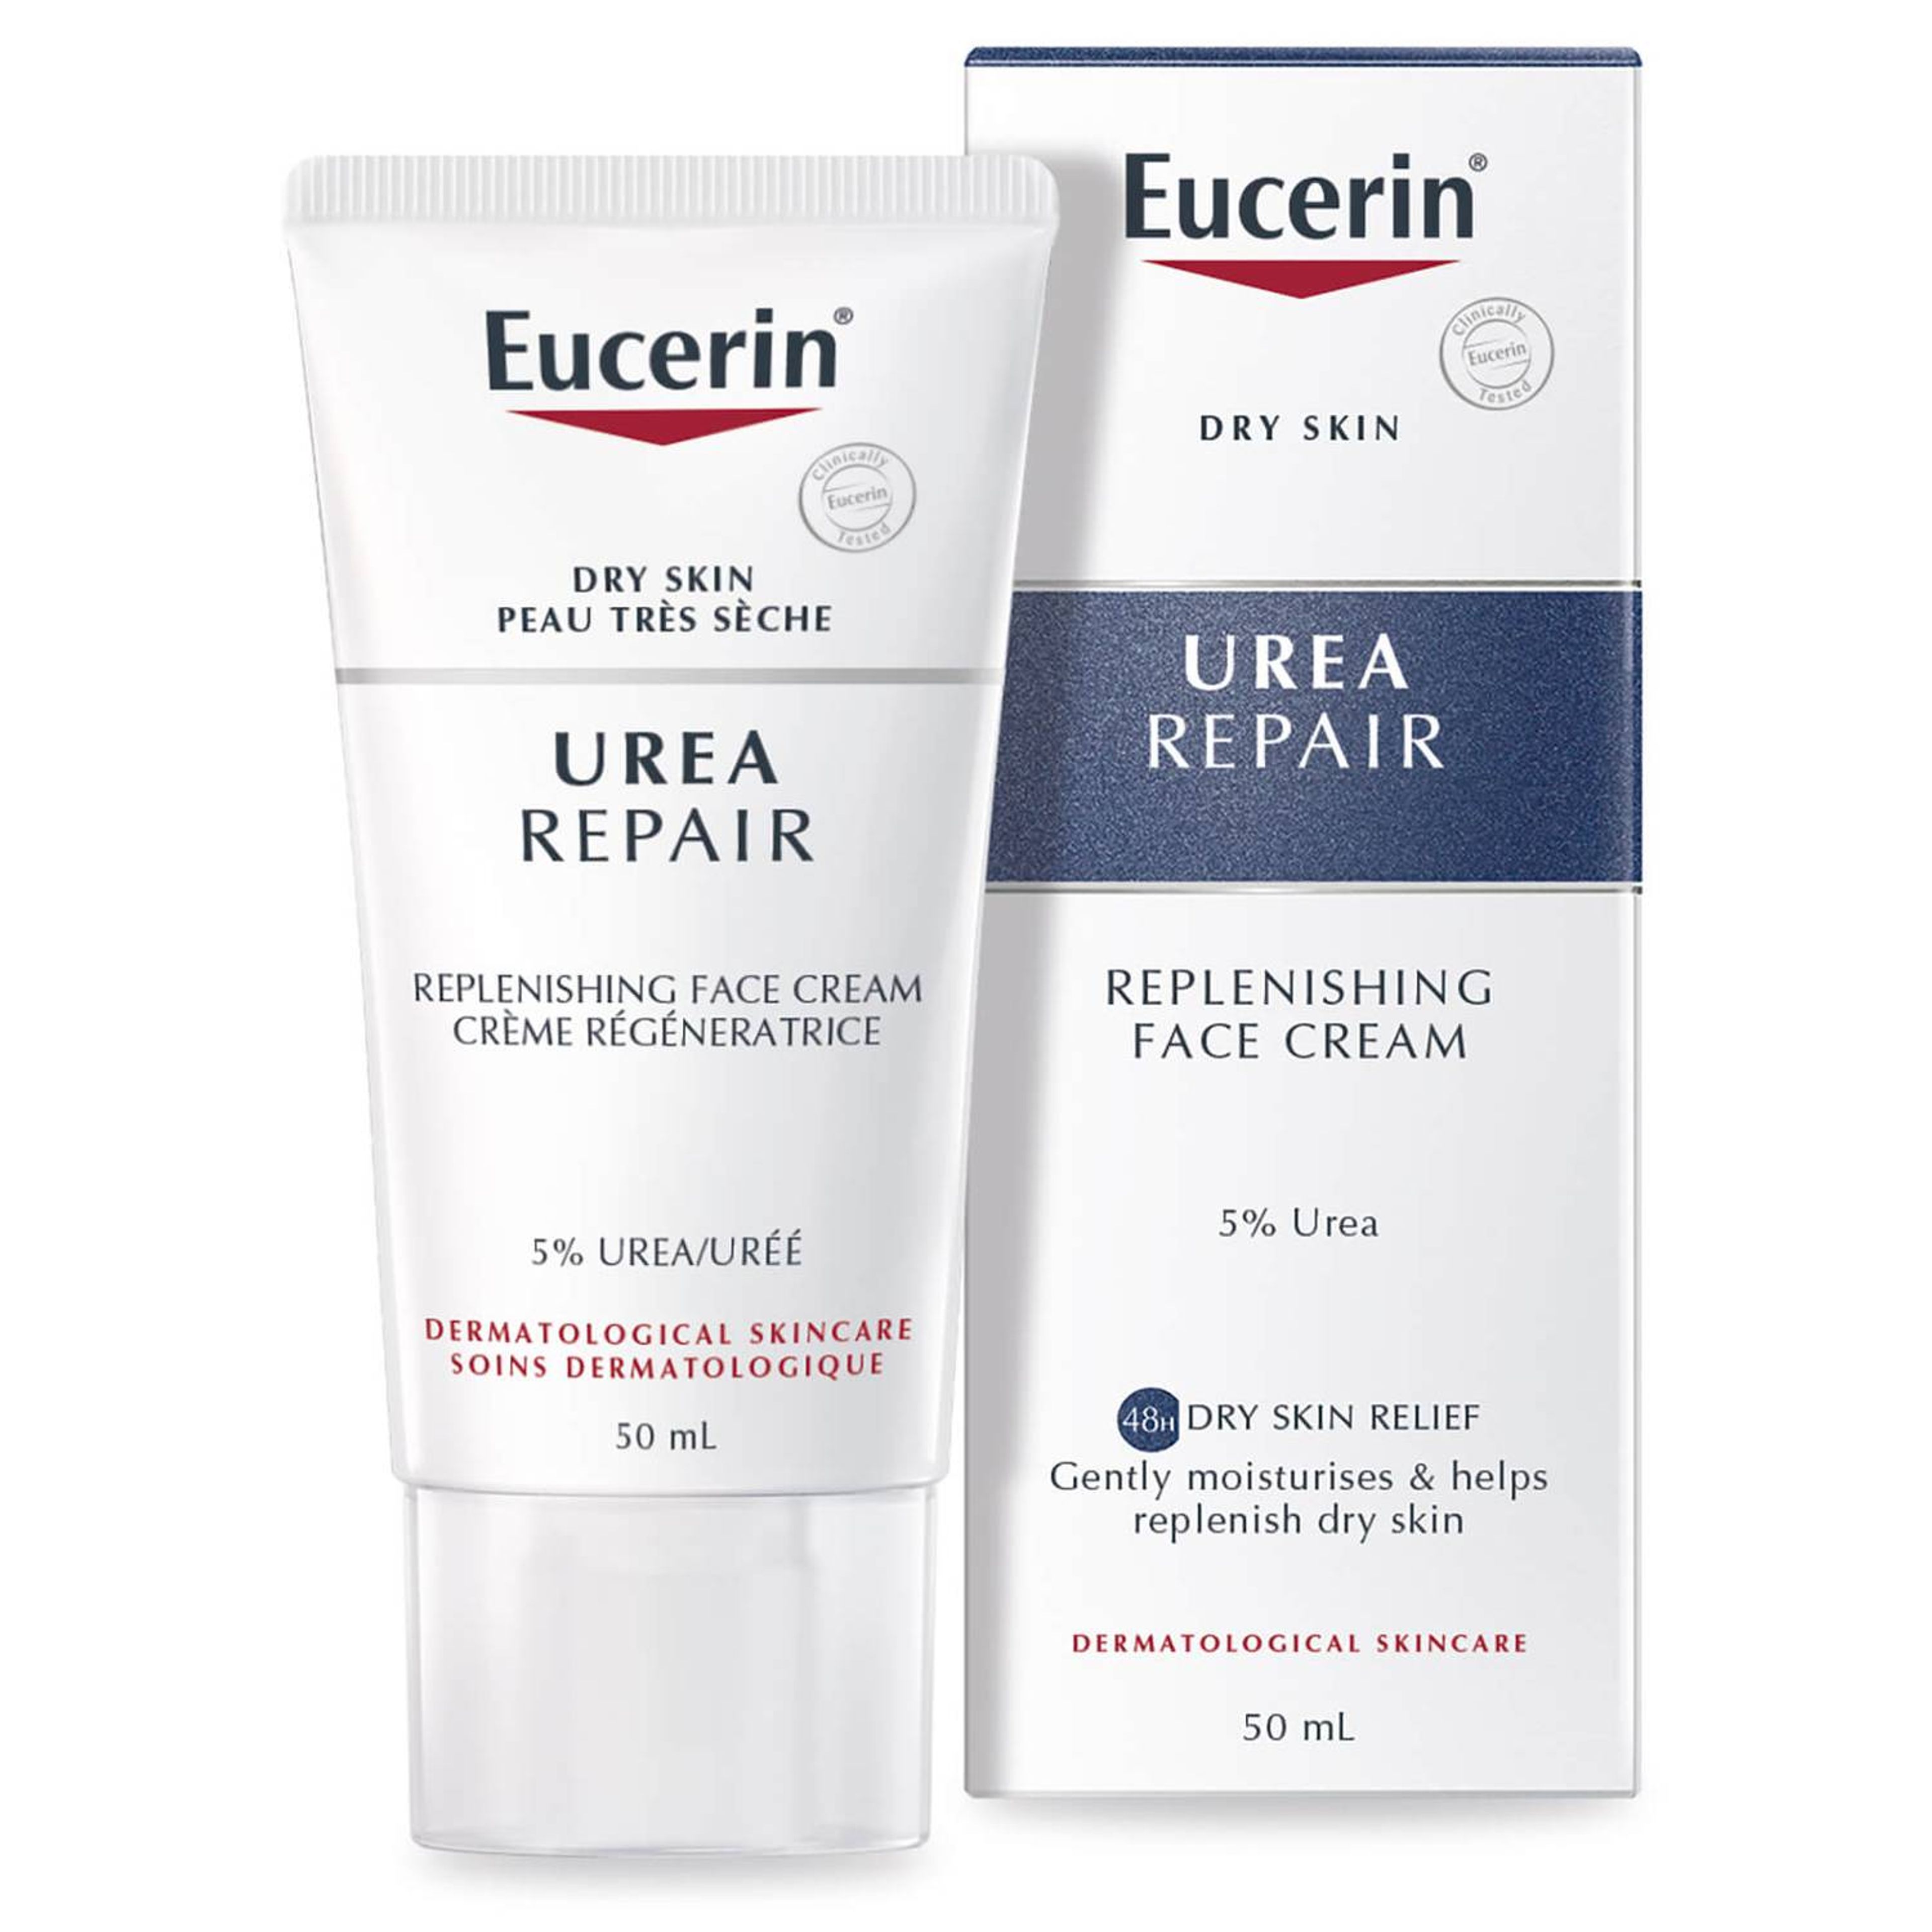  UreaRepair Replenishing Face Cream 5% Urea 